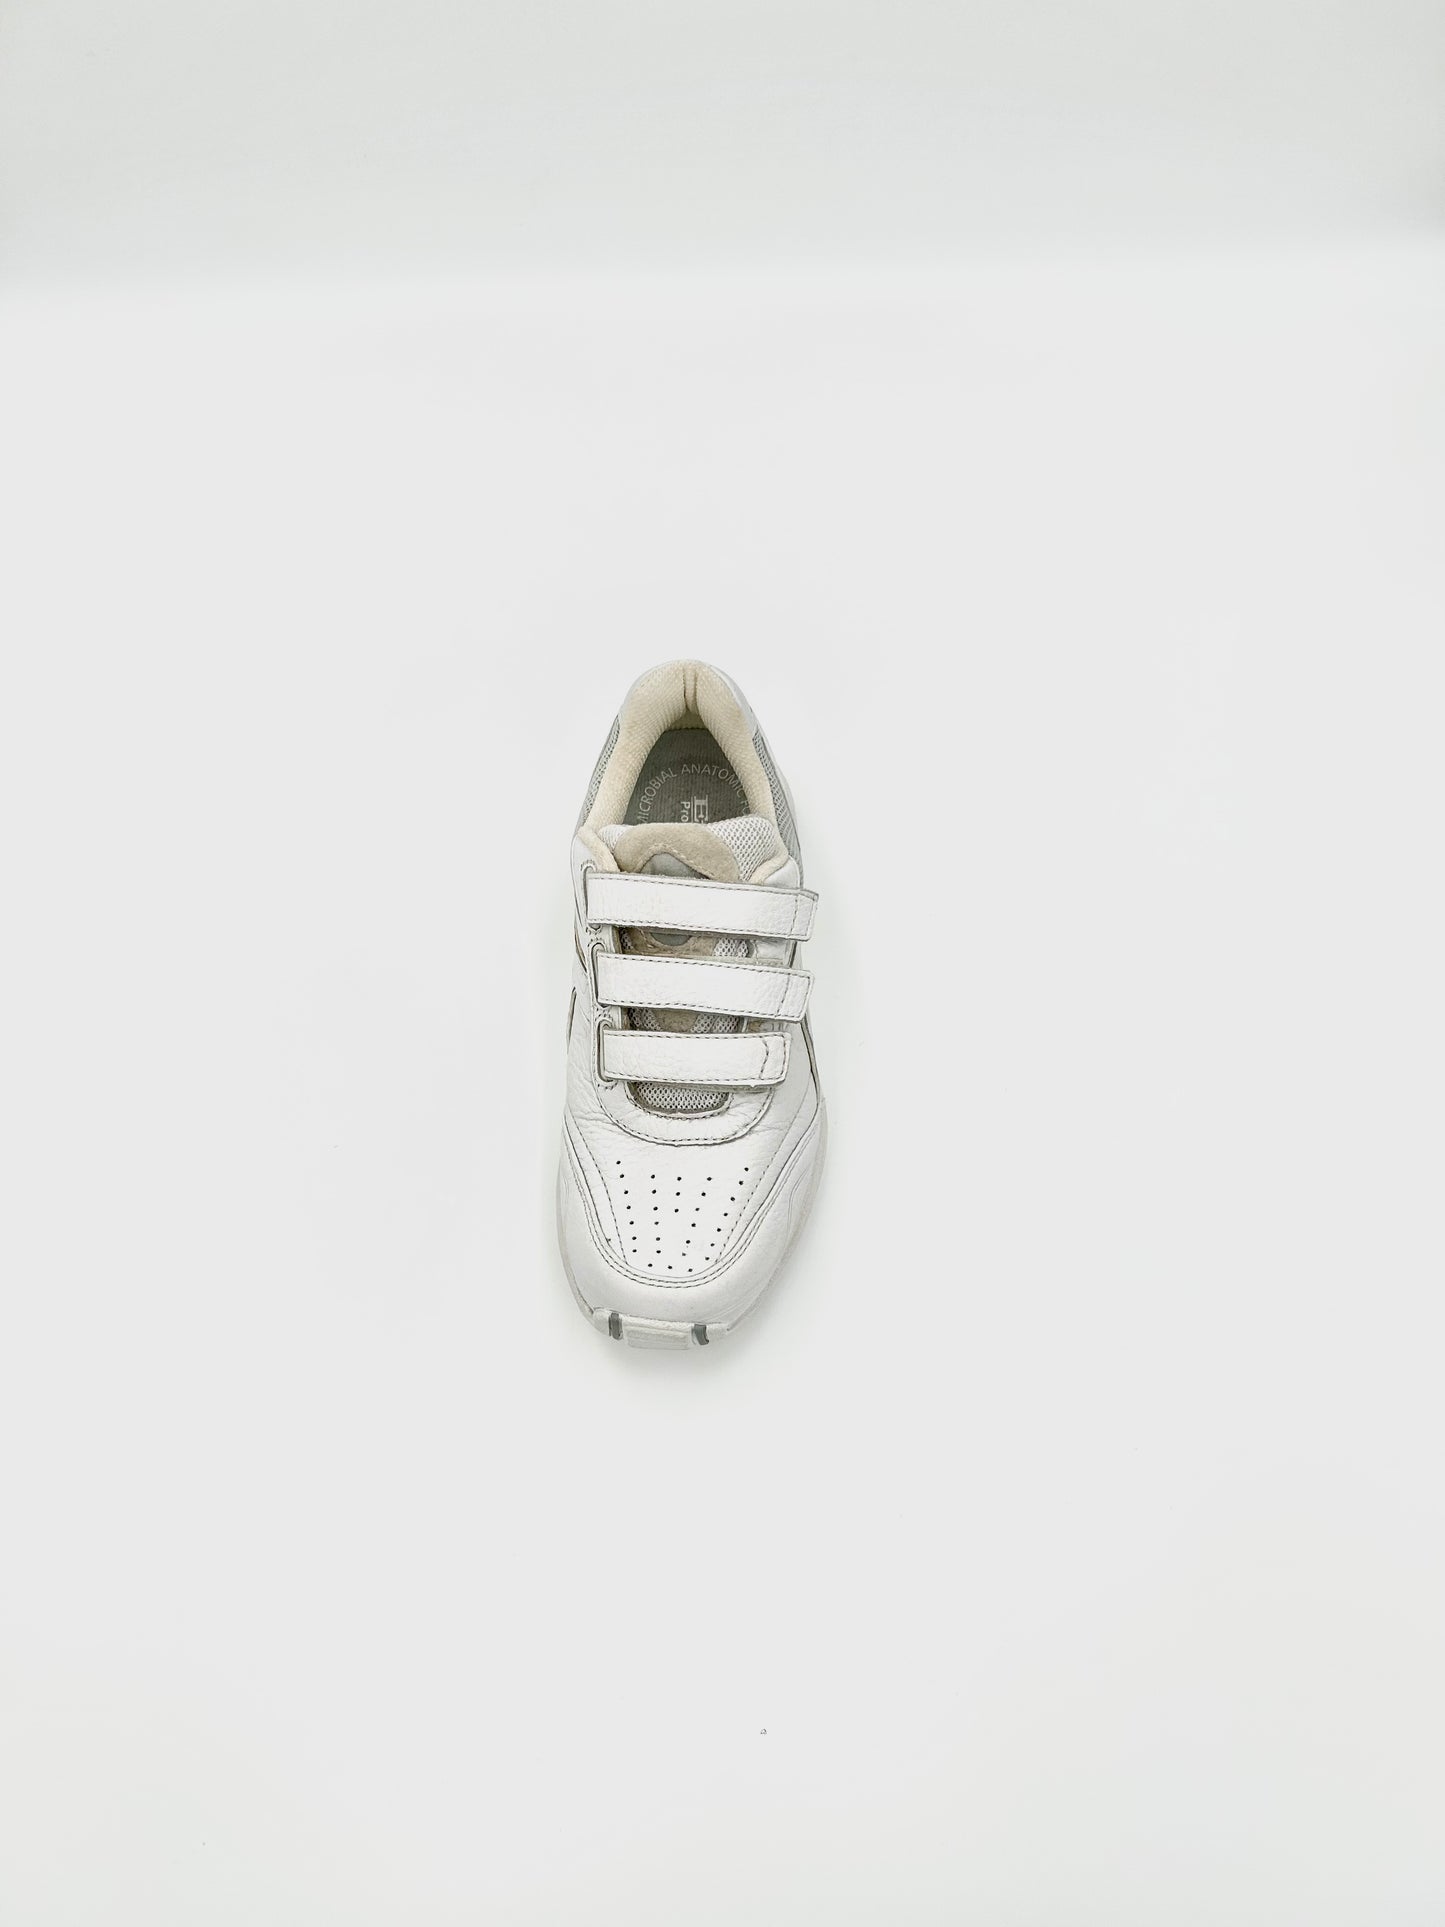 Etonic Sneakers K 5830 chiusura a strappo - white - Etonic